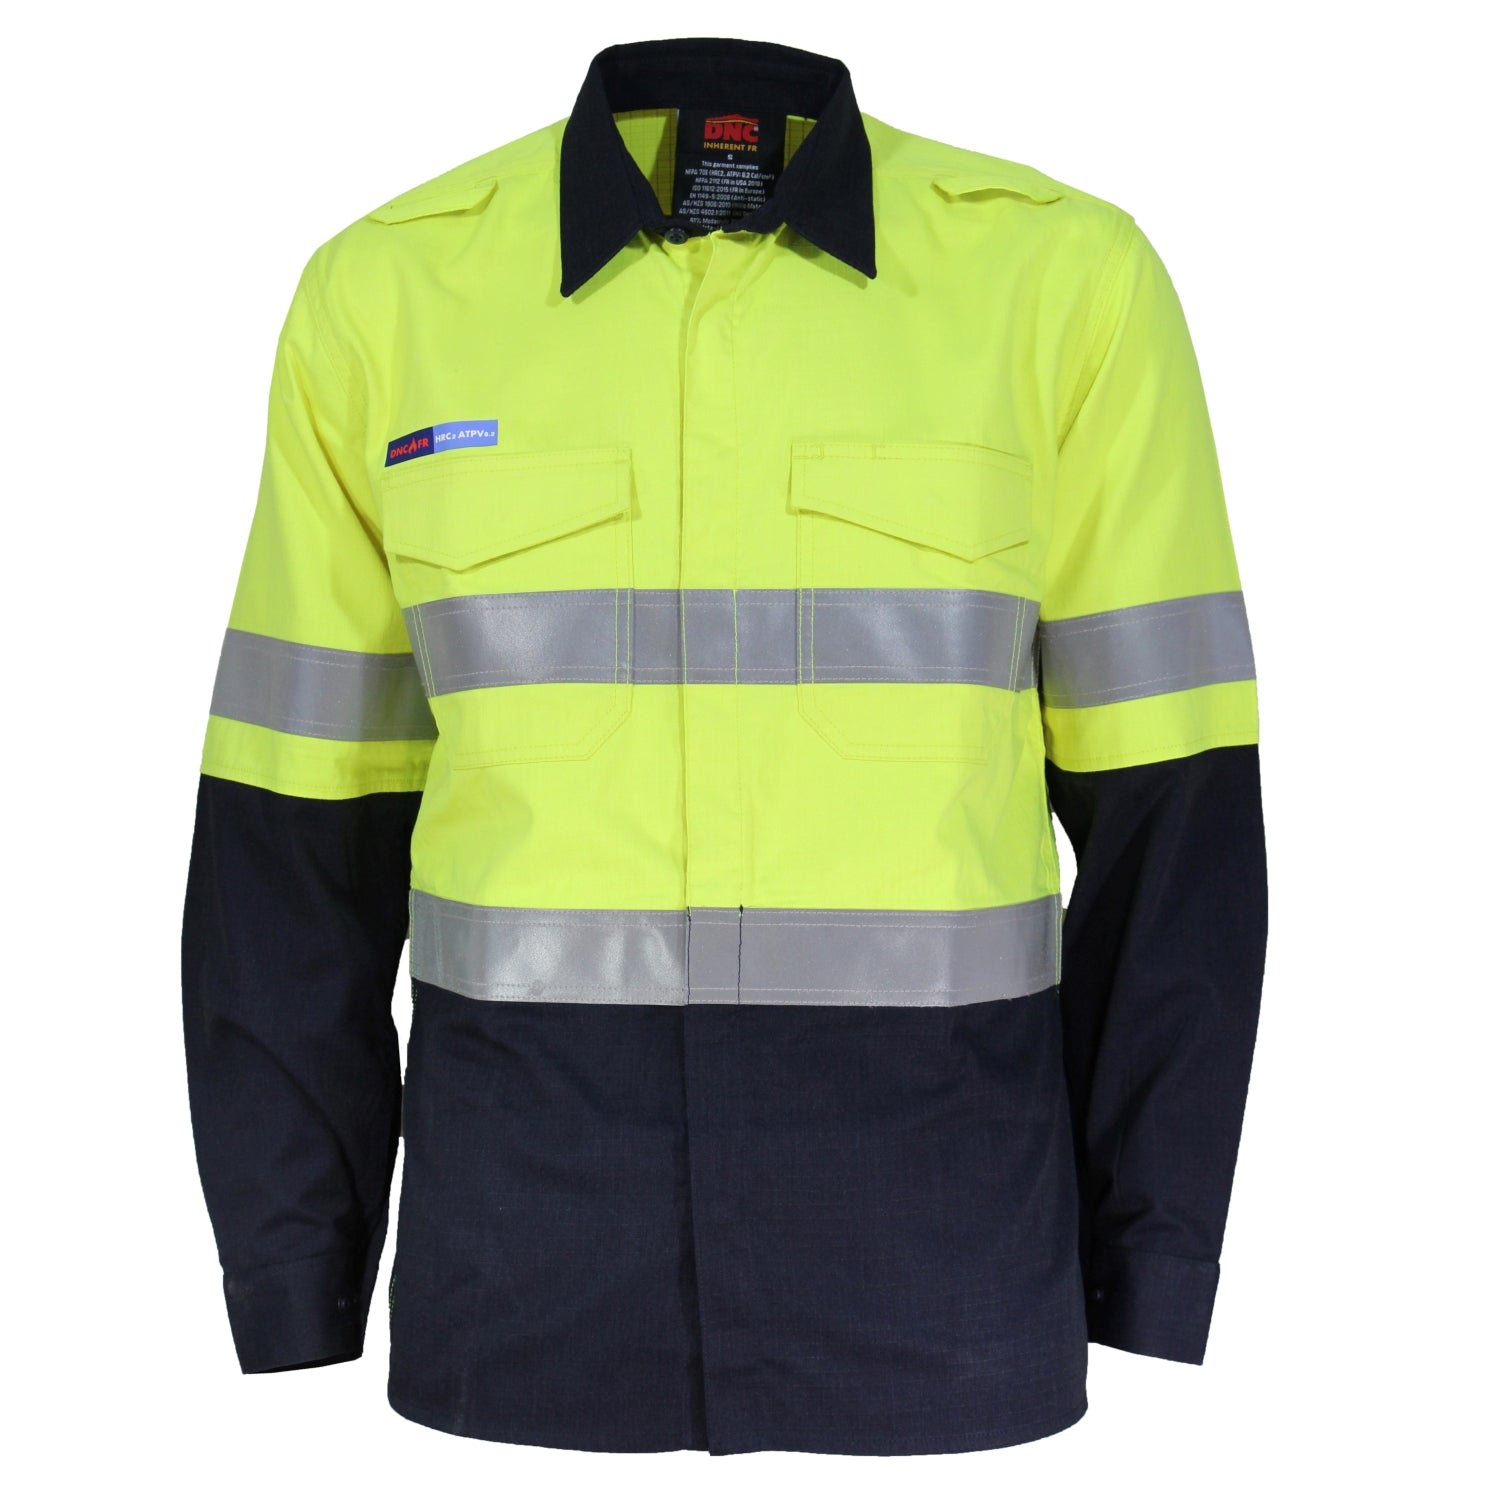 Flamearc Hrc2 2t M/w D/n Shirt - 3455 Work Wear DNC Workwear Yellow/Navy XS 